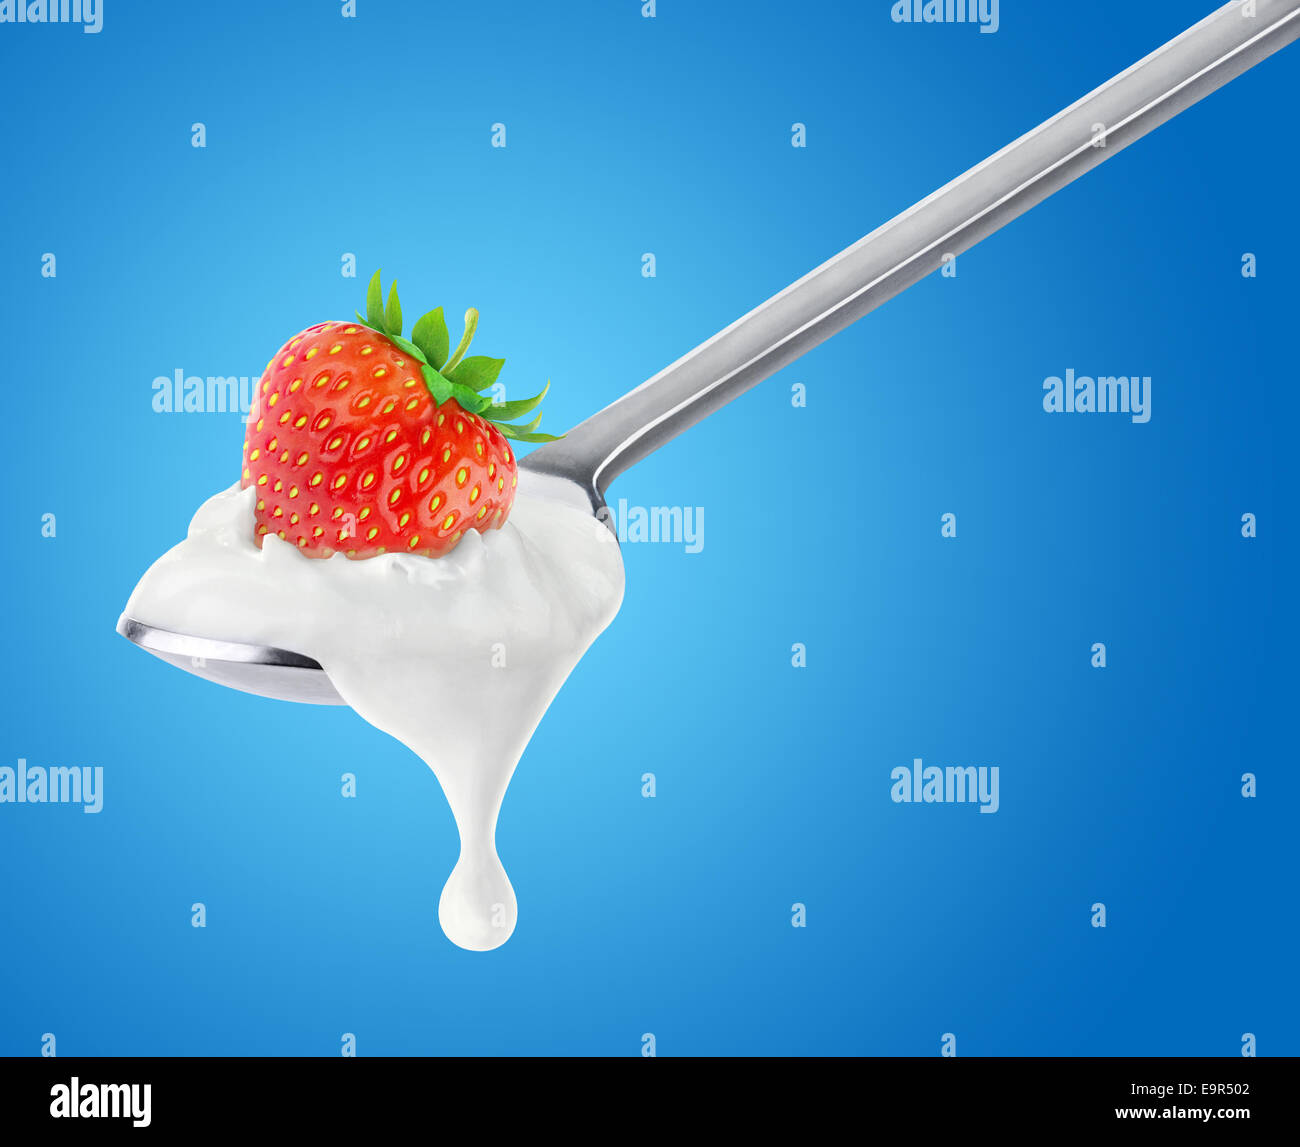 Spoon of strawberry yogurt on blue background Stock Photo